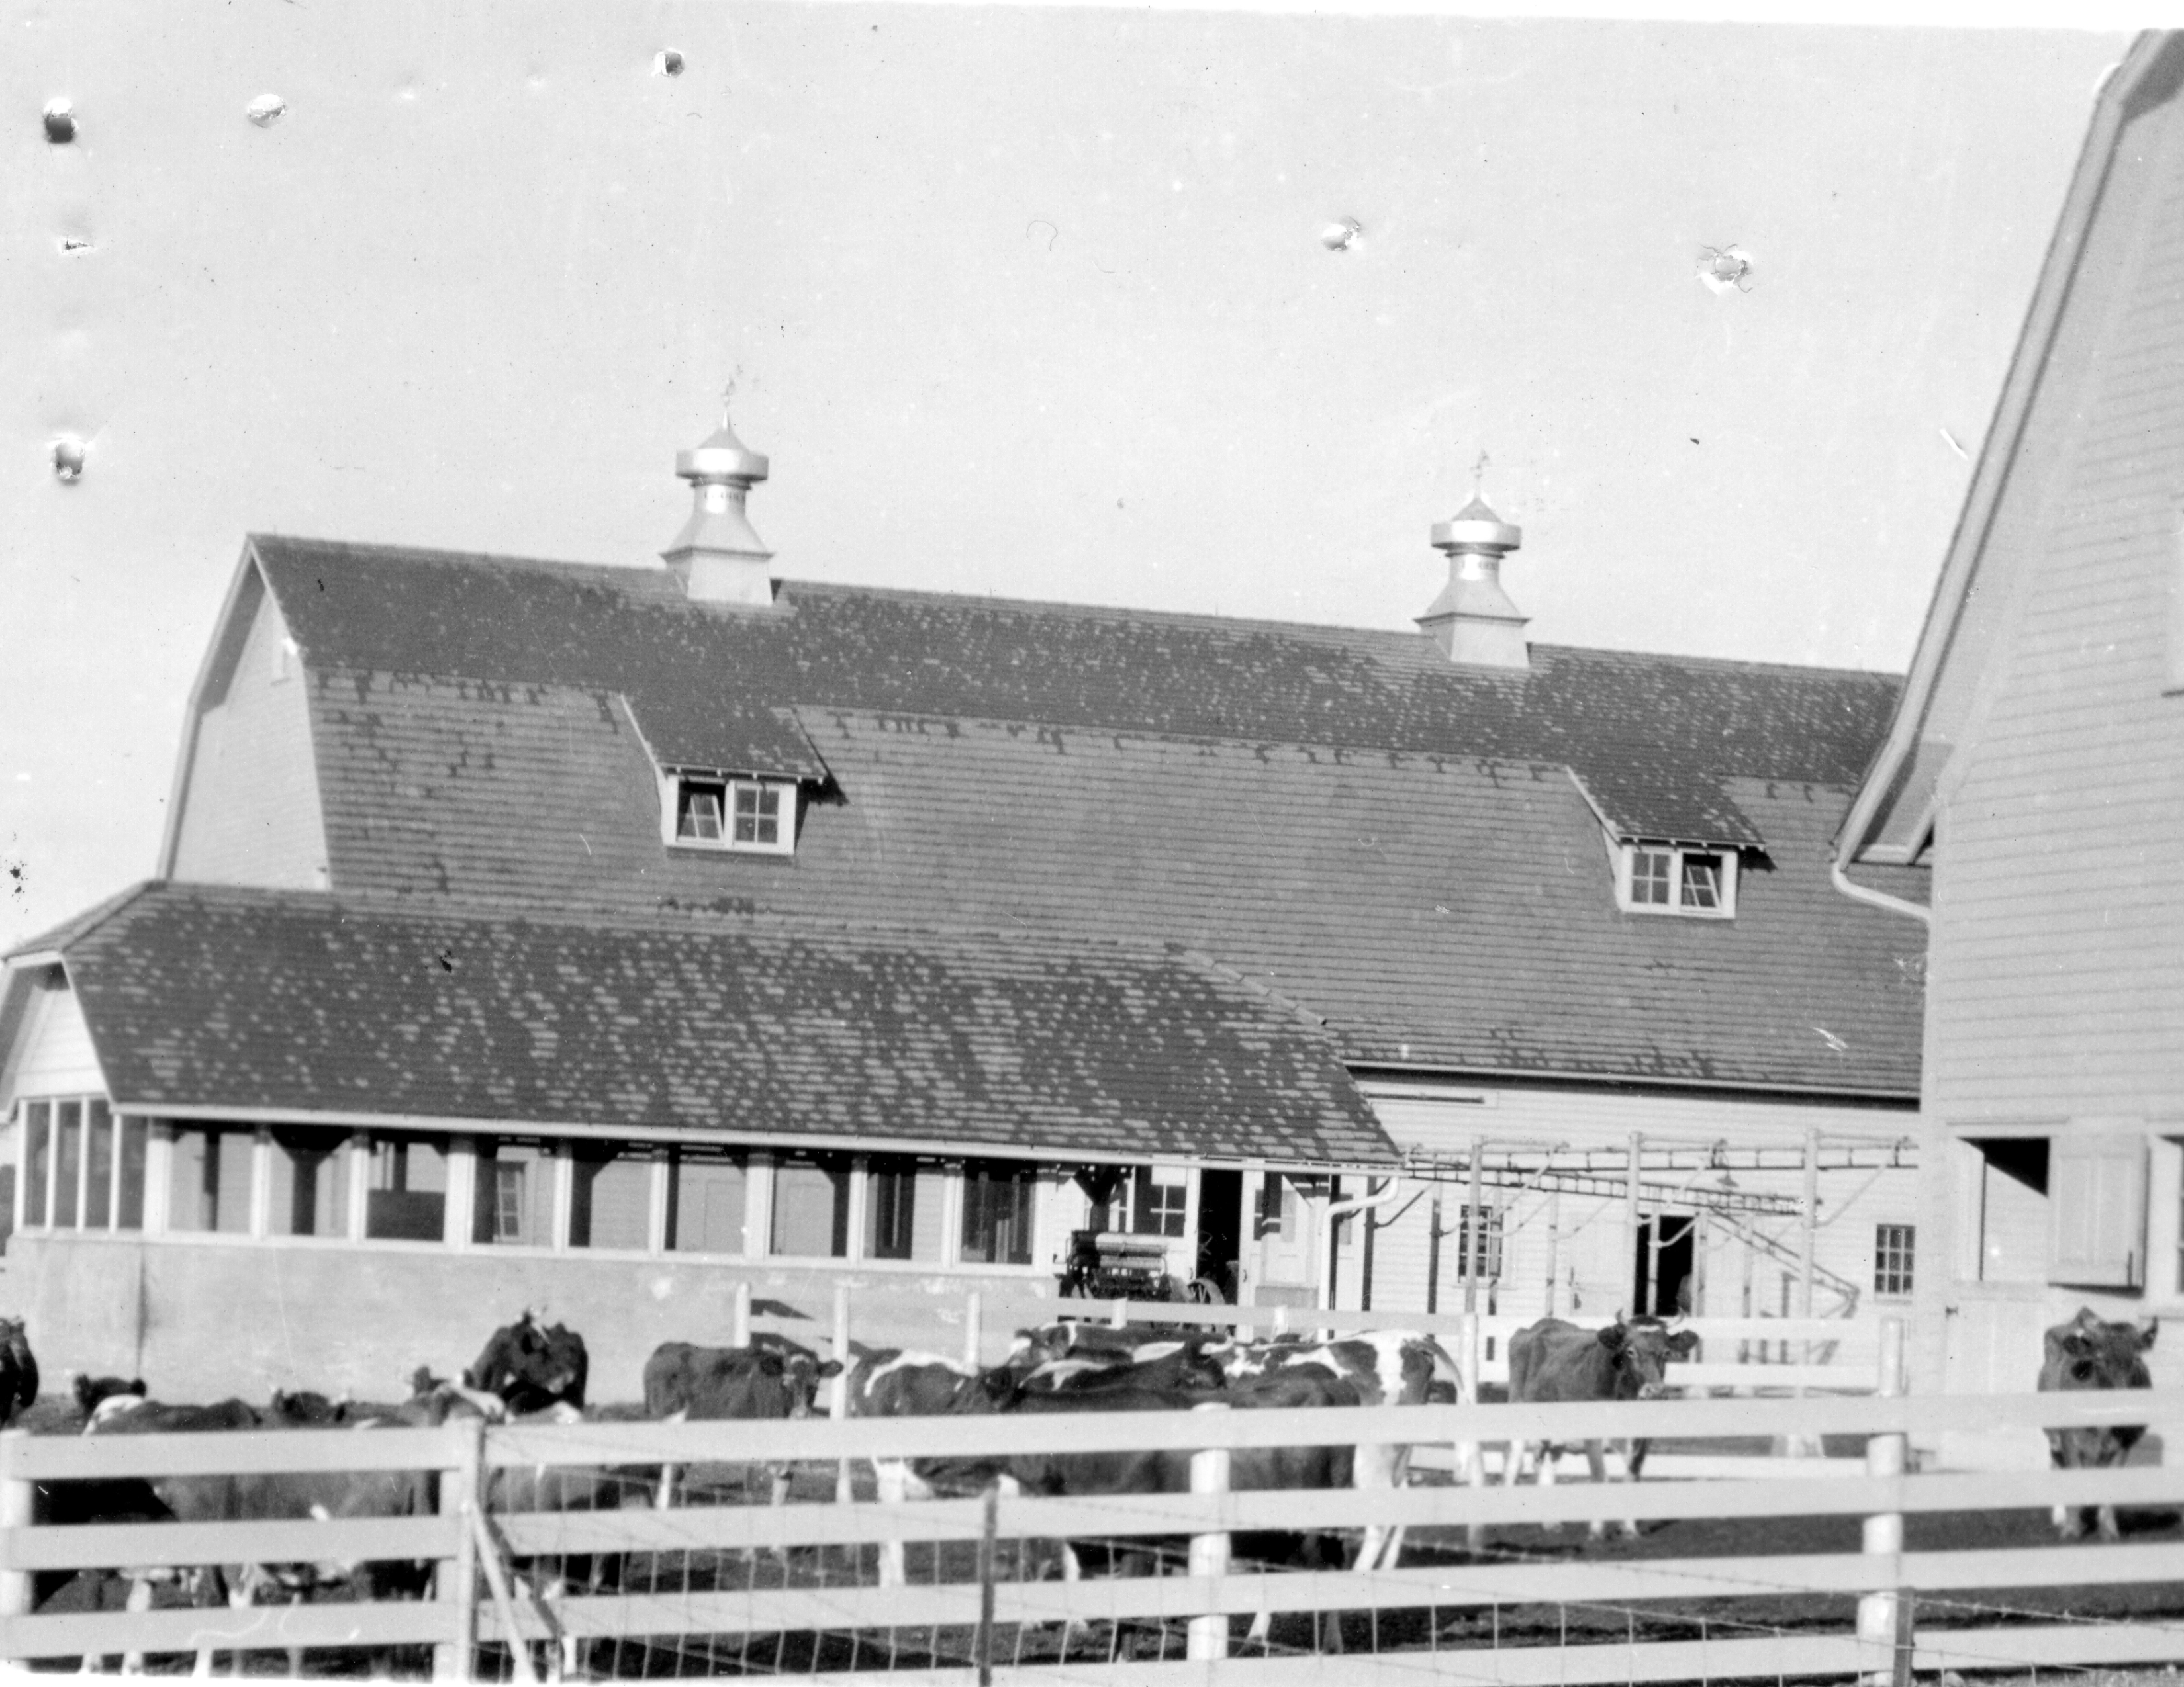 Mauure shed, house, and barn 